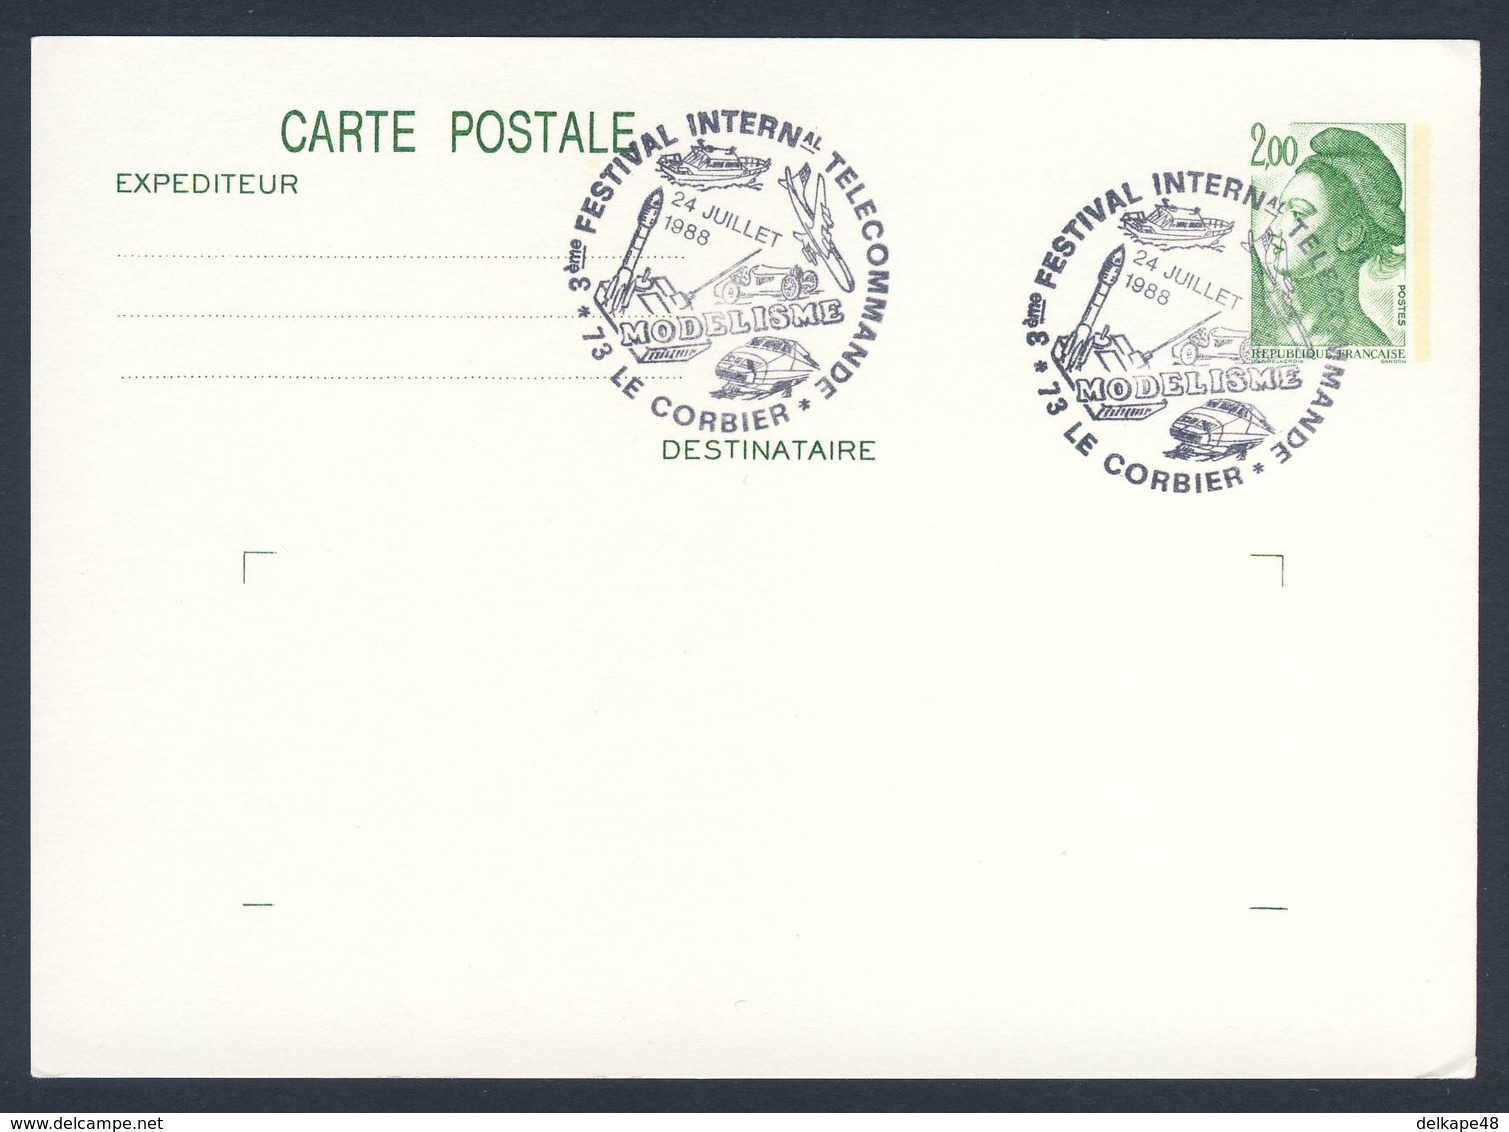 France Rep. Française 1988 Card / Karte / Carte - 3e Festival Int. Telecommande - Modelisme / Fernbedienung - Treinen